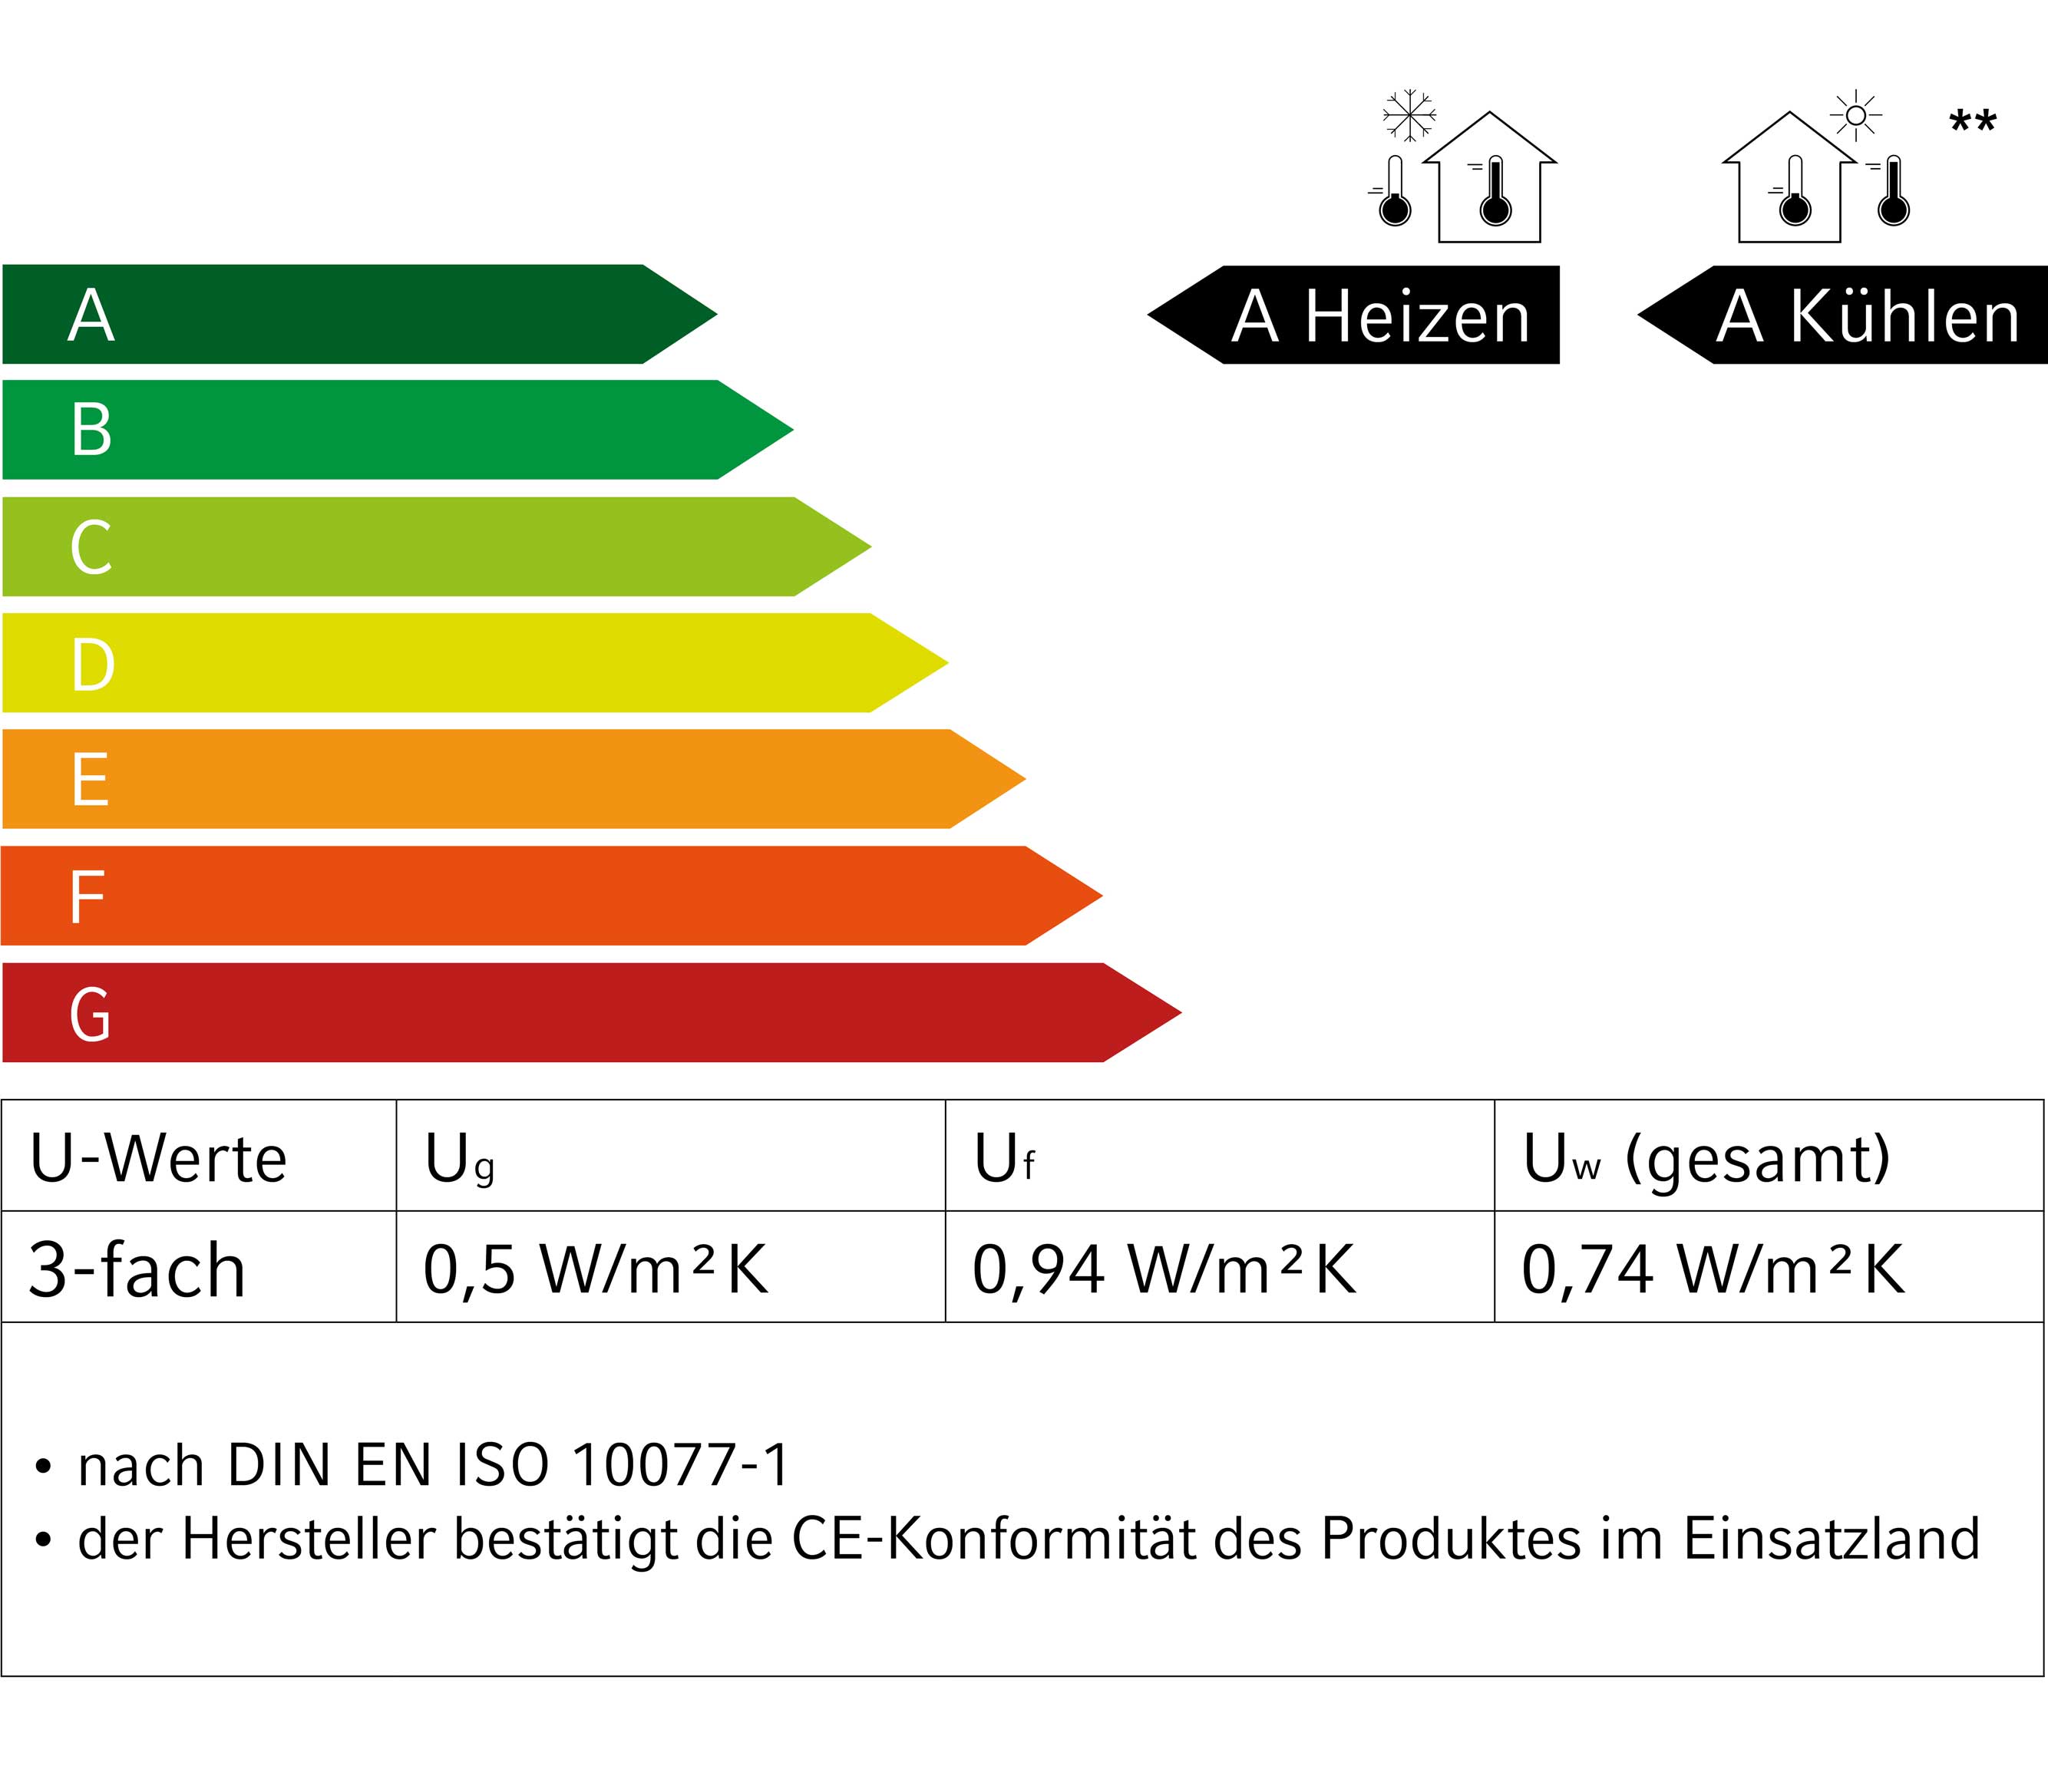 Energie Label eco 8000 energeto MD